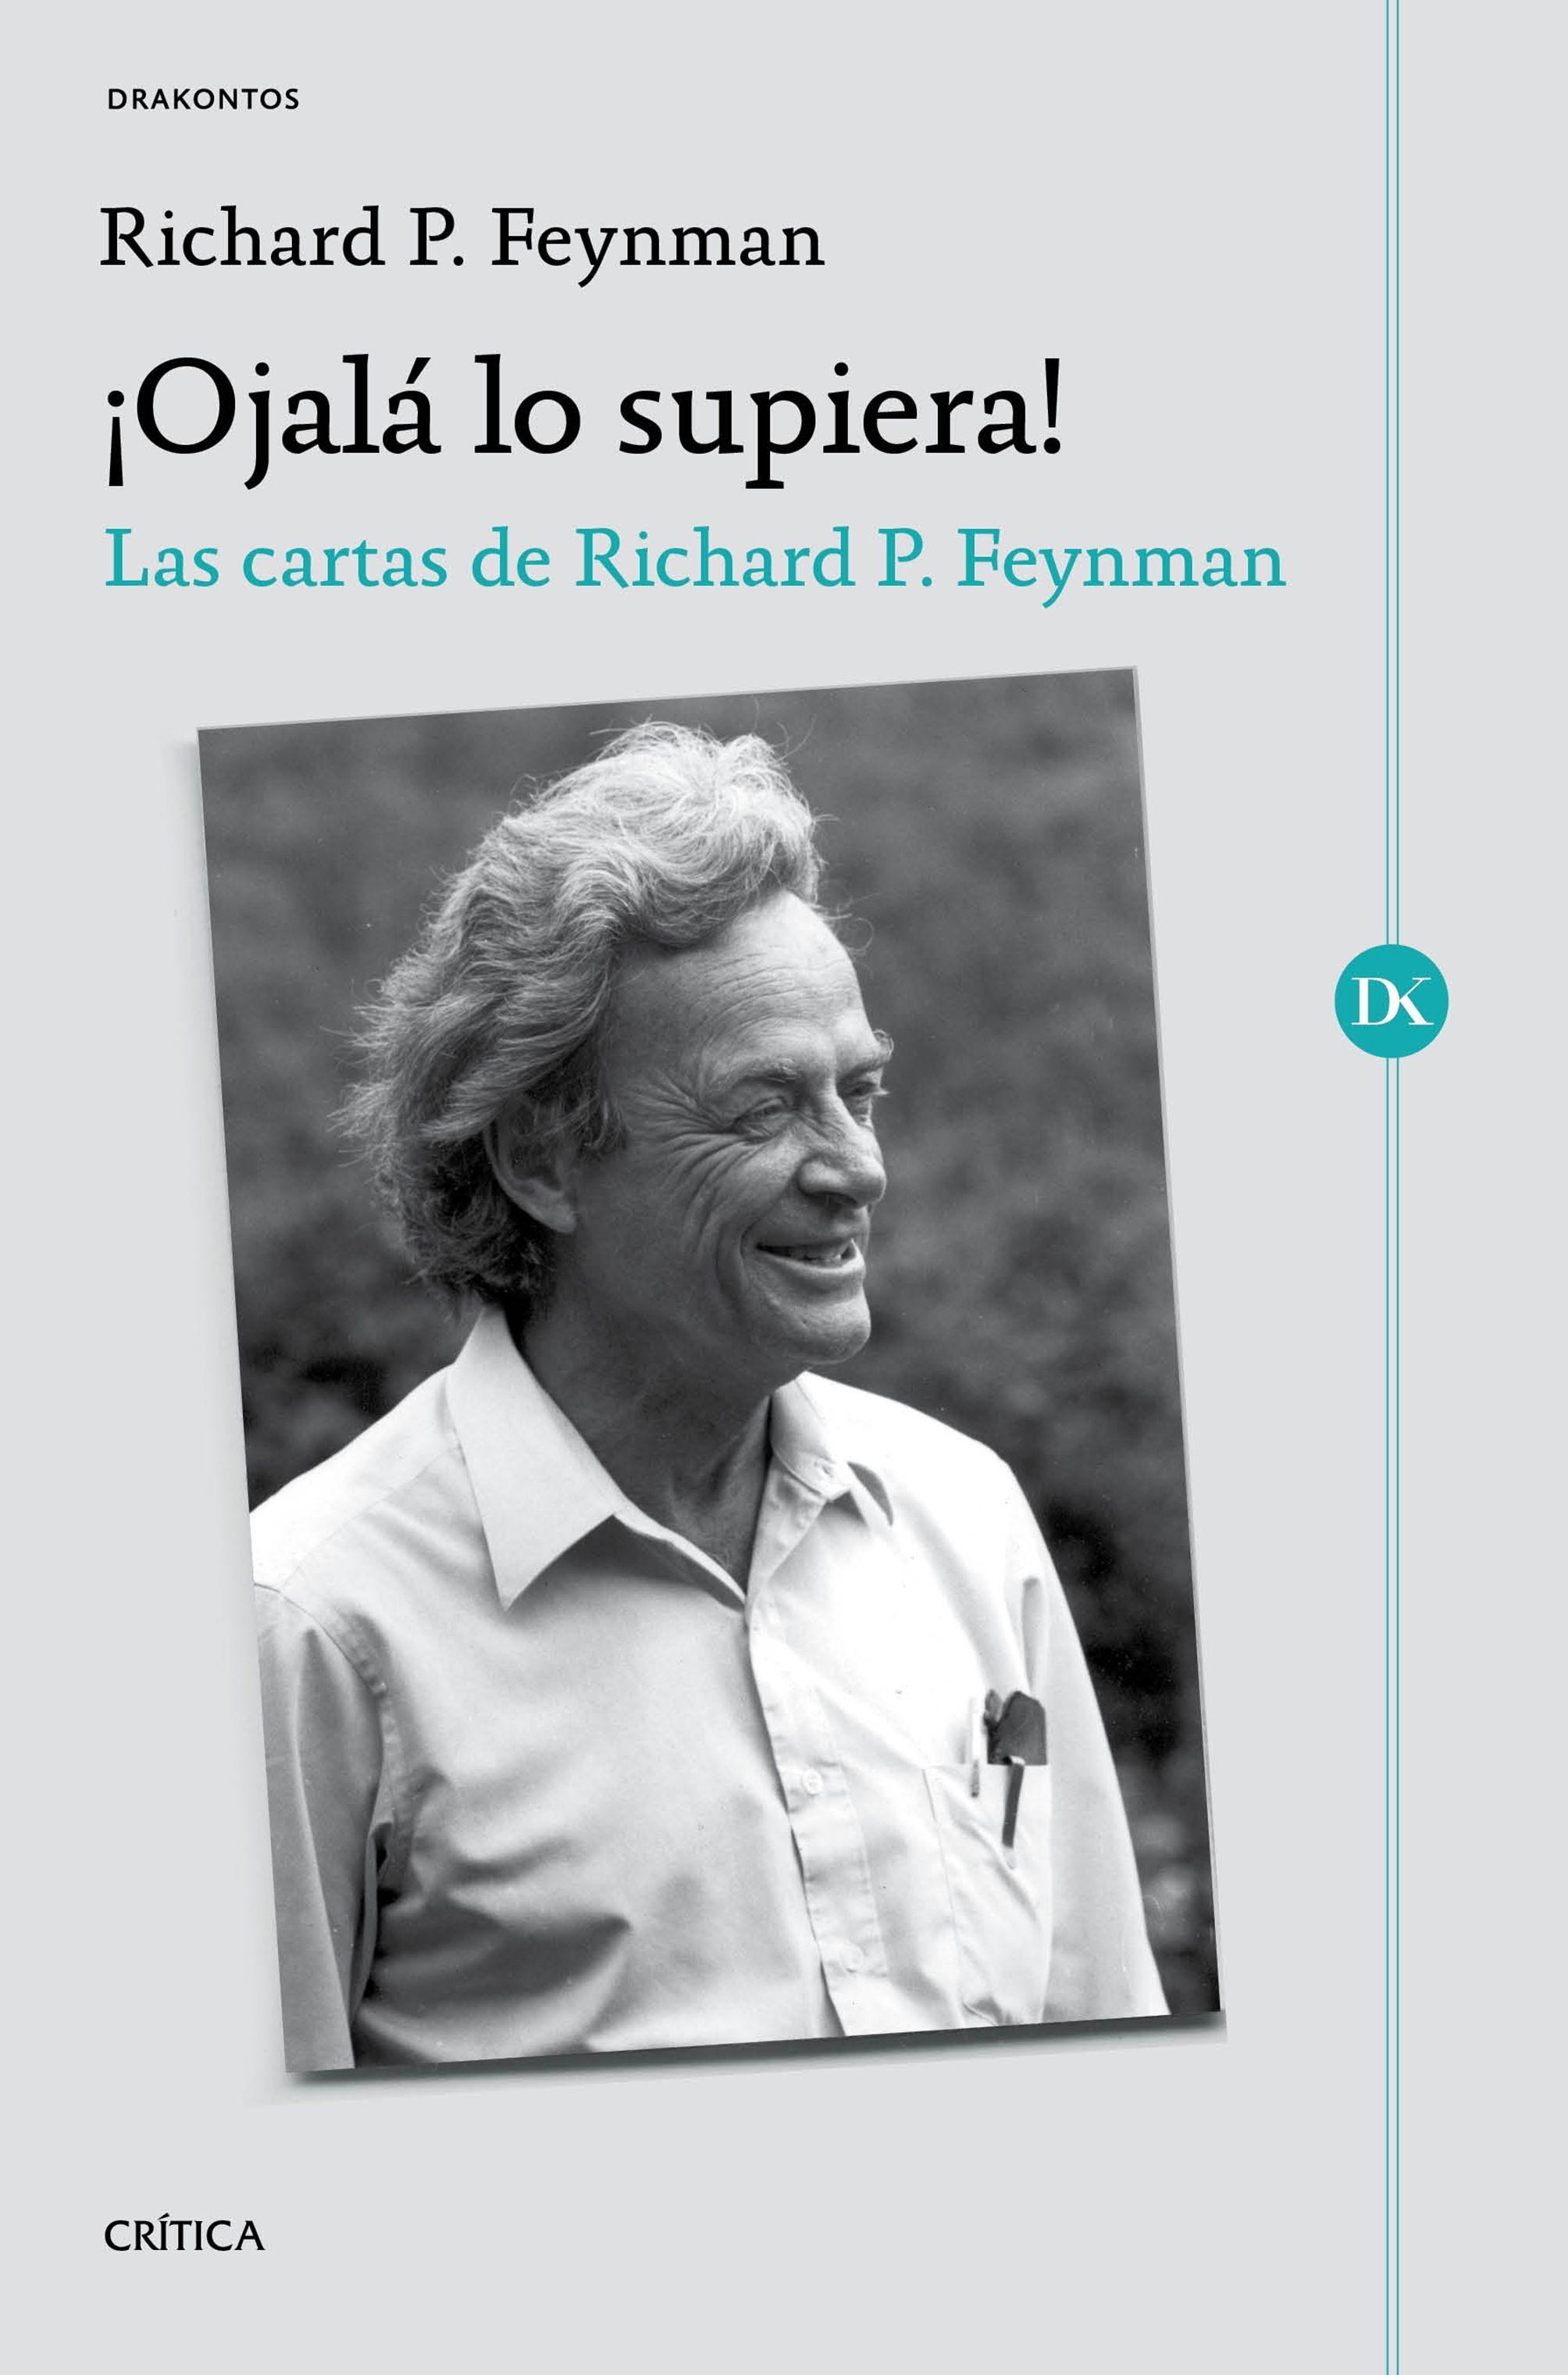 ¡Ojalá lo supiera! "Las cartas de Richard P. Feynman". 